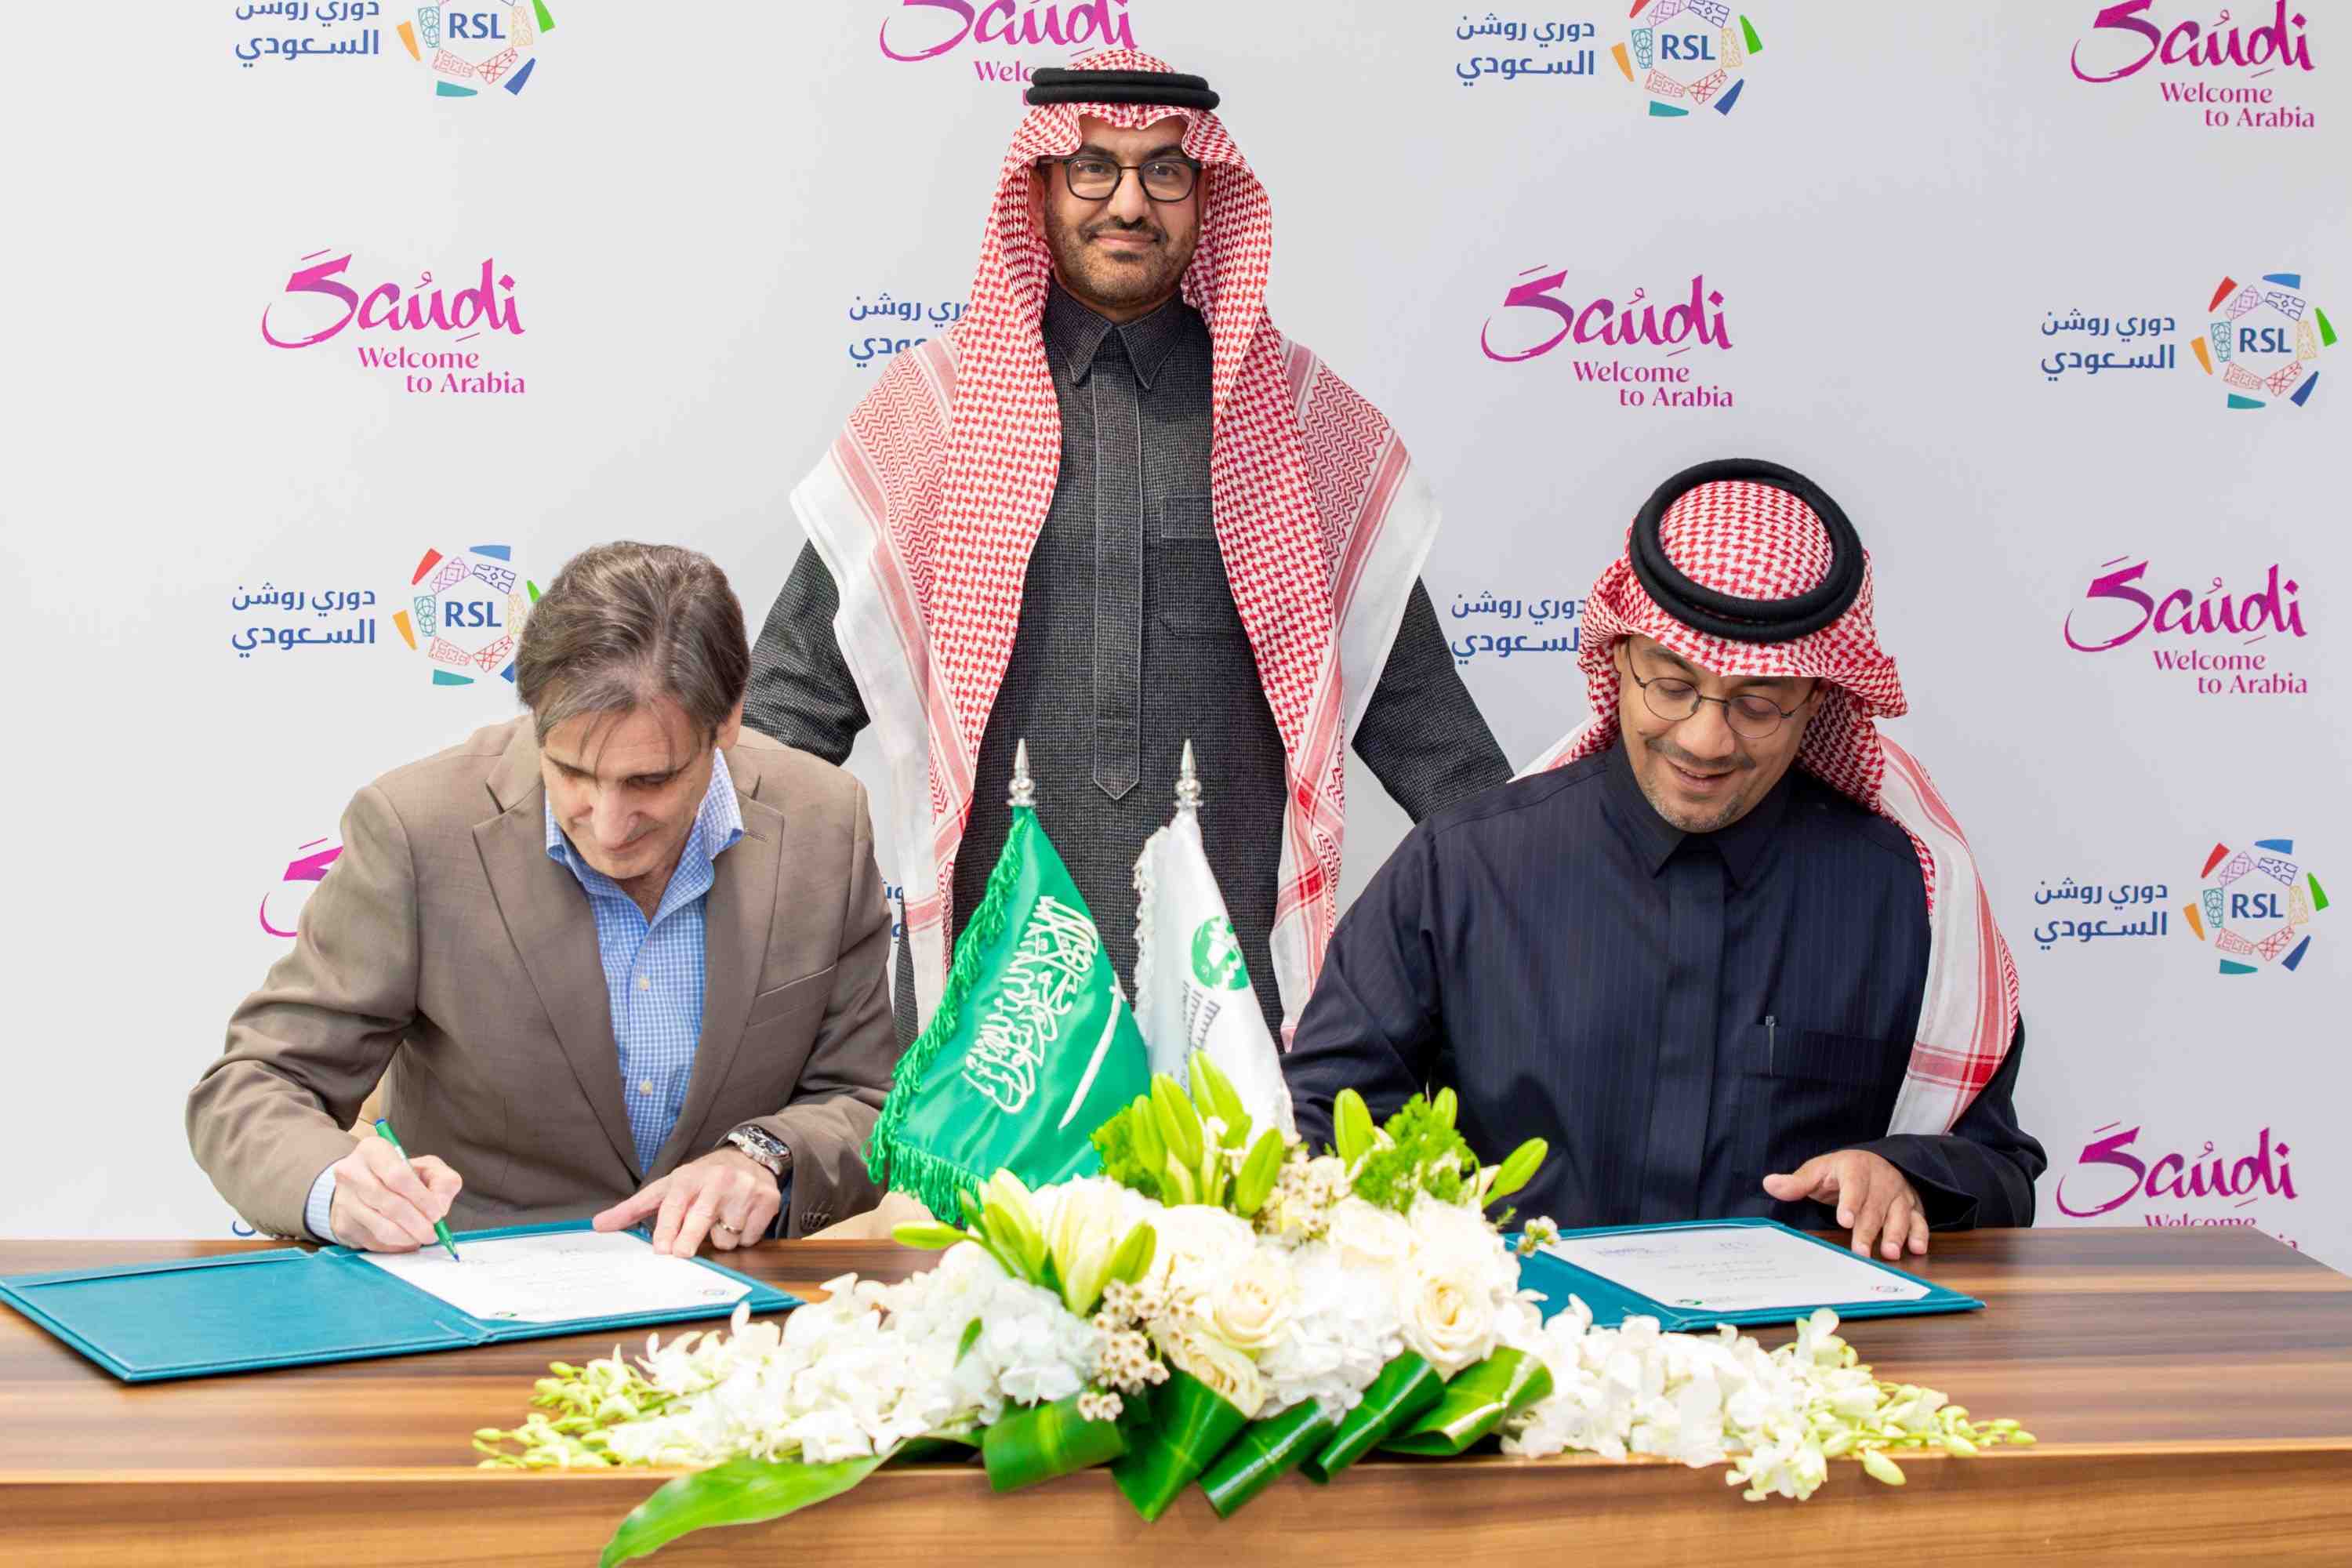 RSL: Saudi welcome to Arabia announcement for Platinum Sponsorship